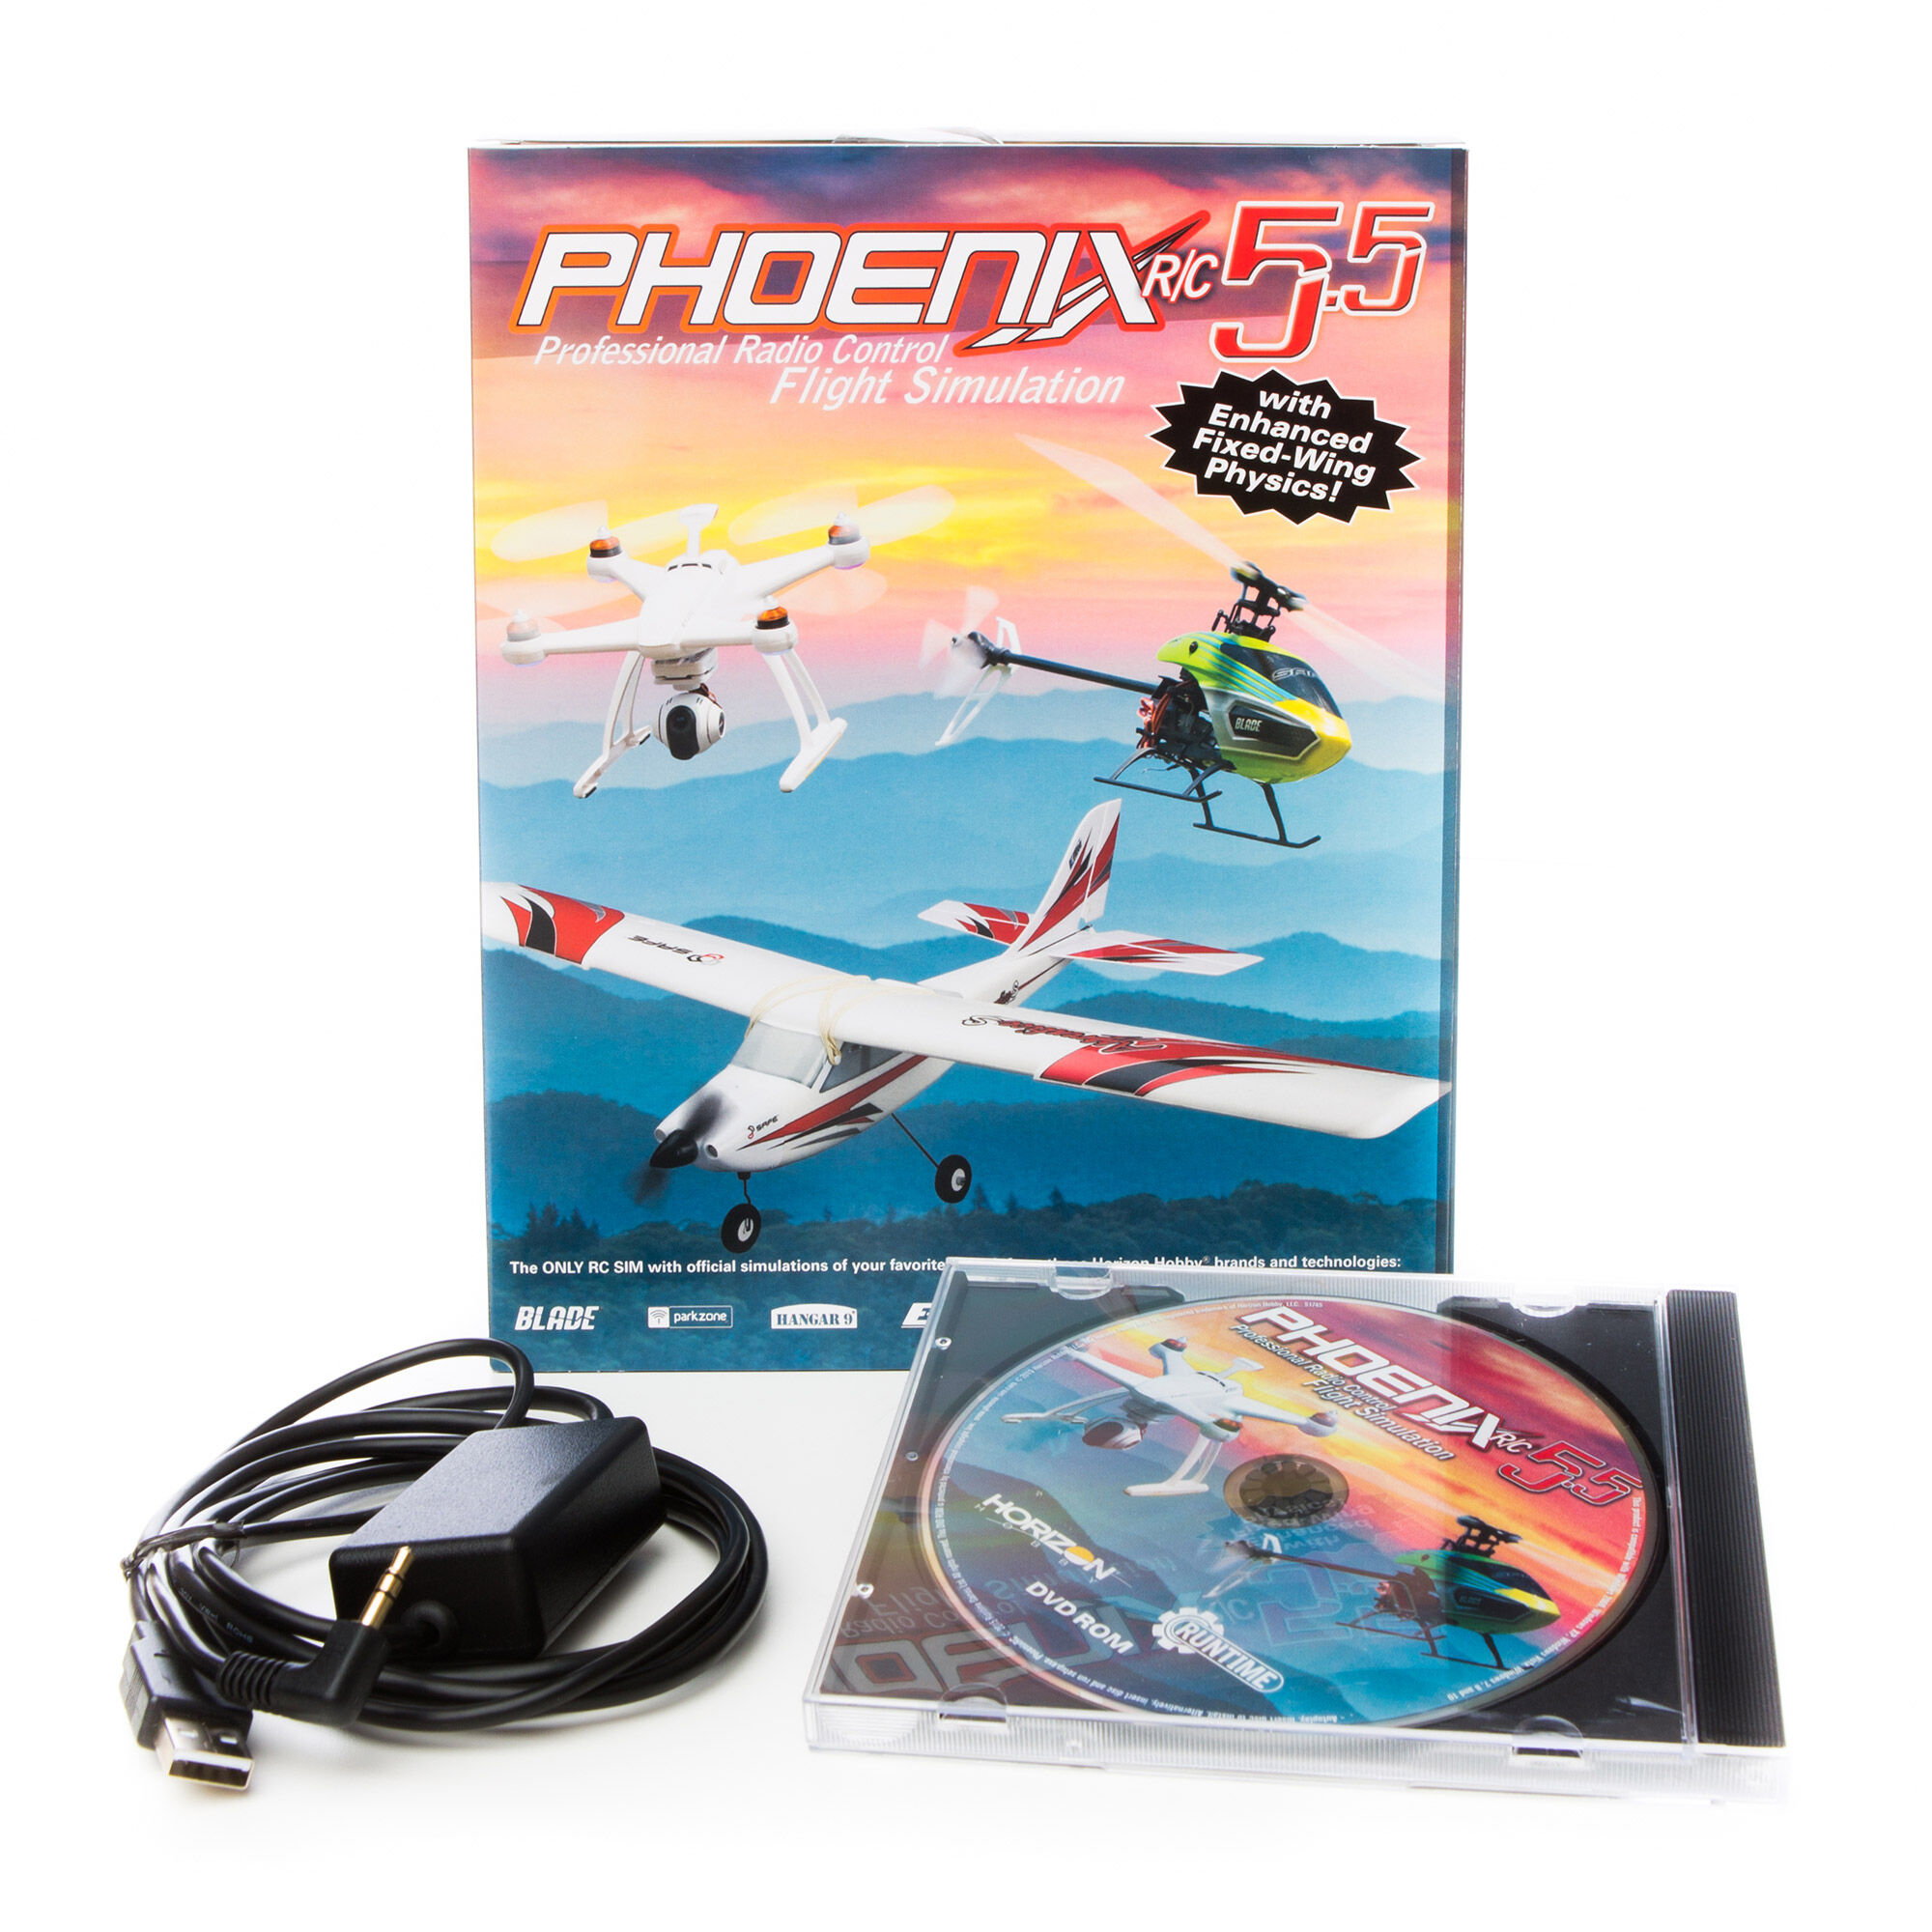 phoenix rc flight simulator 5.5